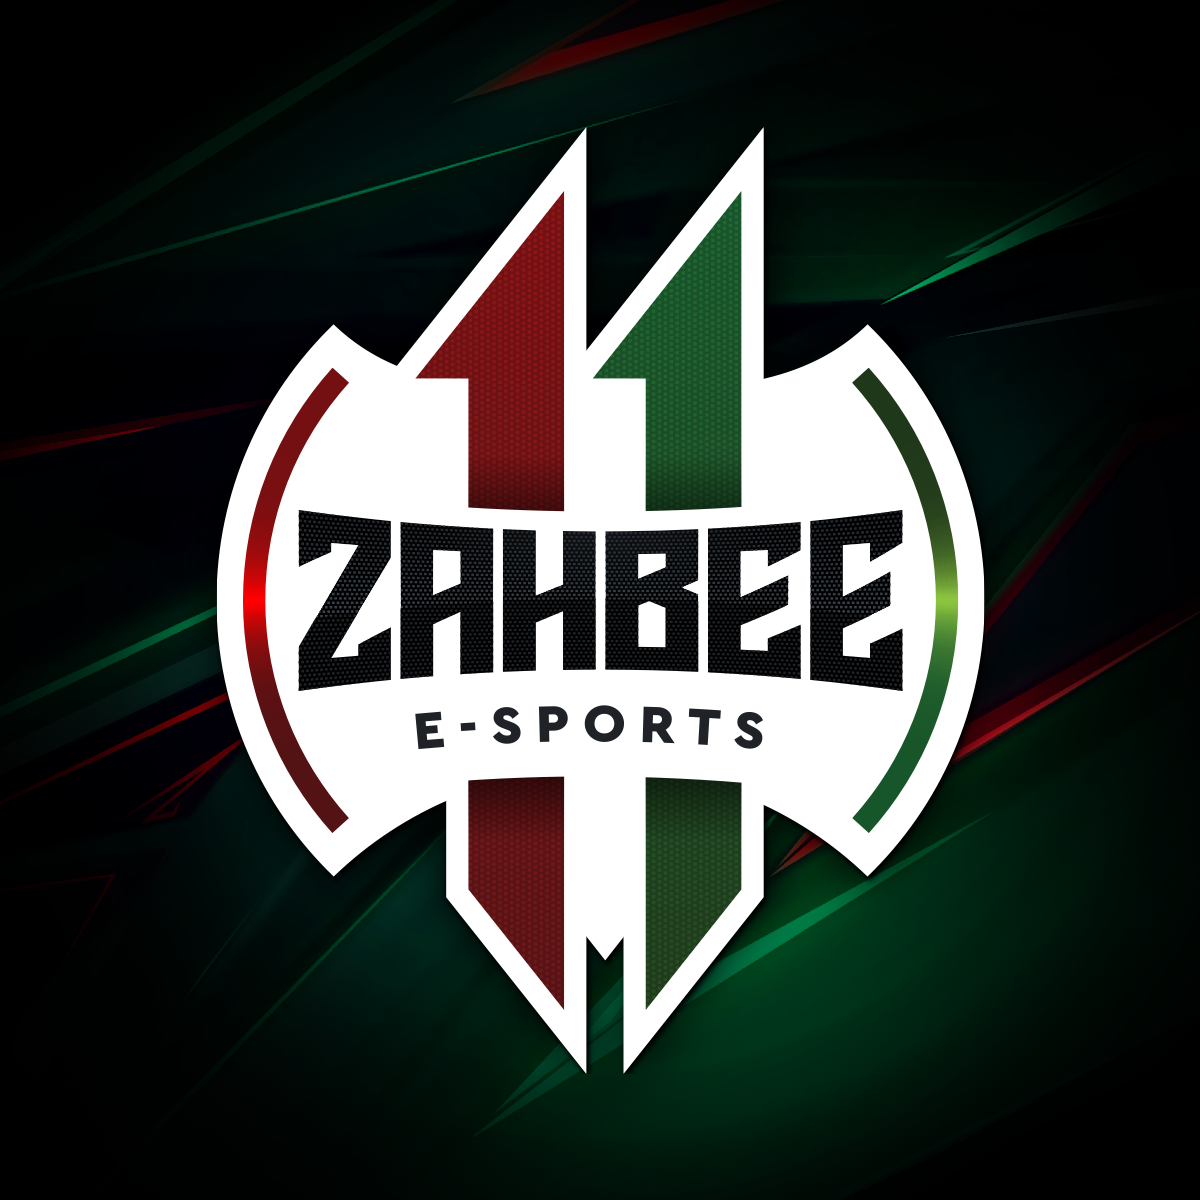 Zahbee11 E-SPORTS